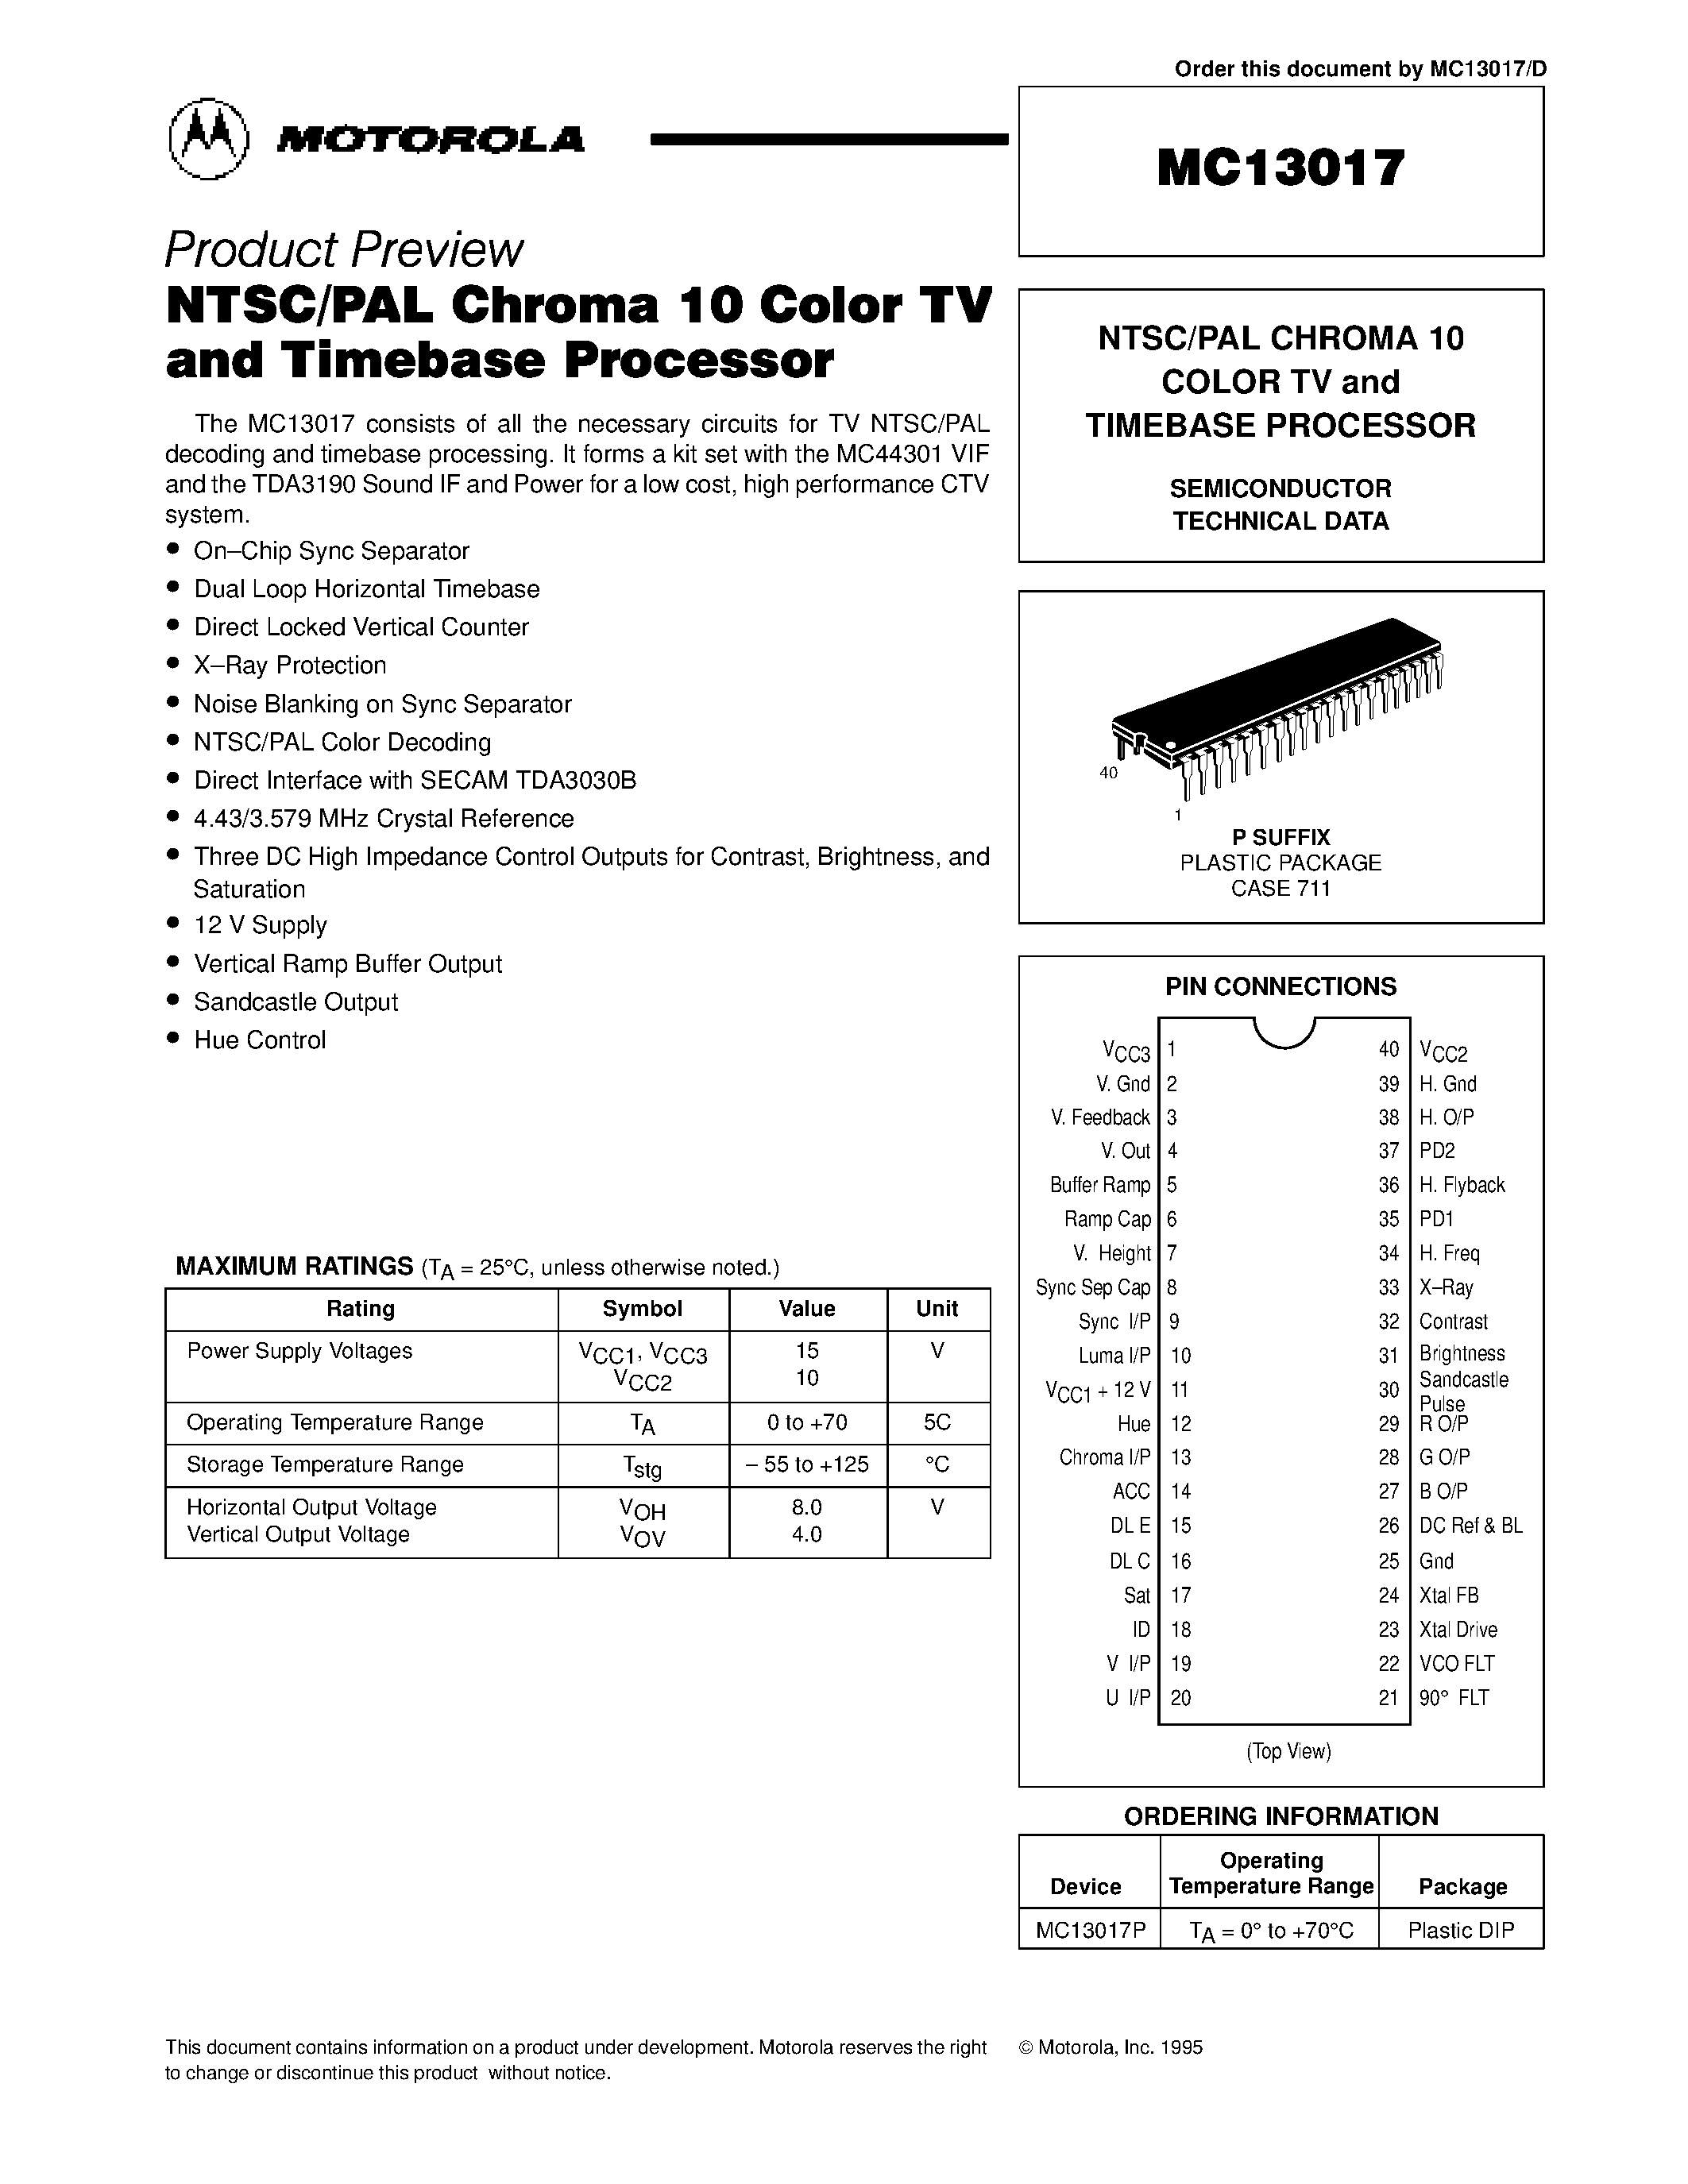 Datasheet MC13017P - NTSC/PAL CHROMA 10 COLOR TV and TIMEBASE PROCESSOR page 1